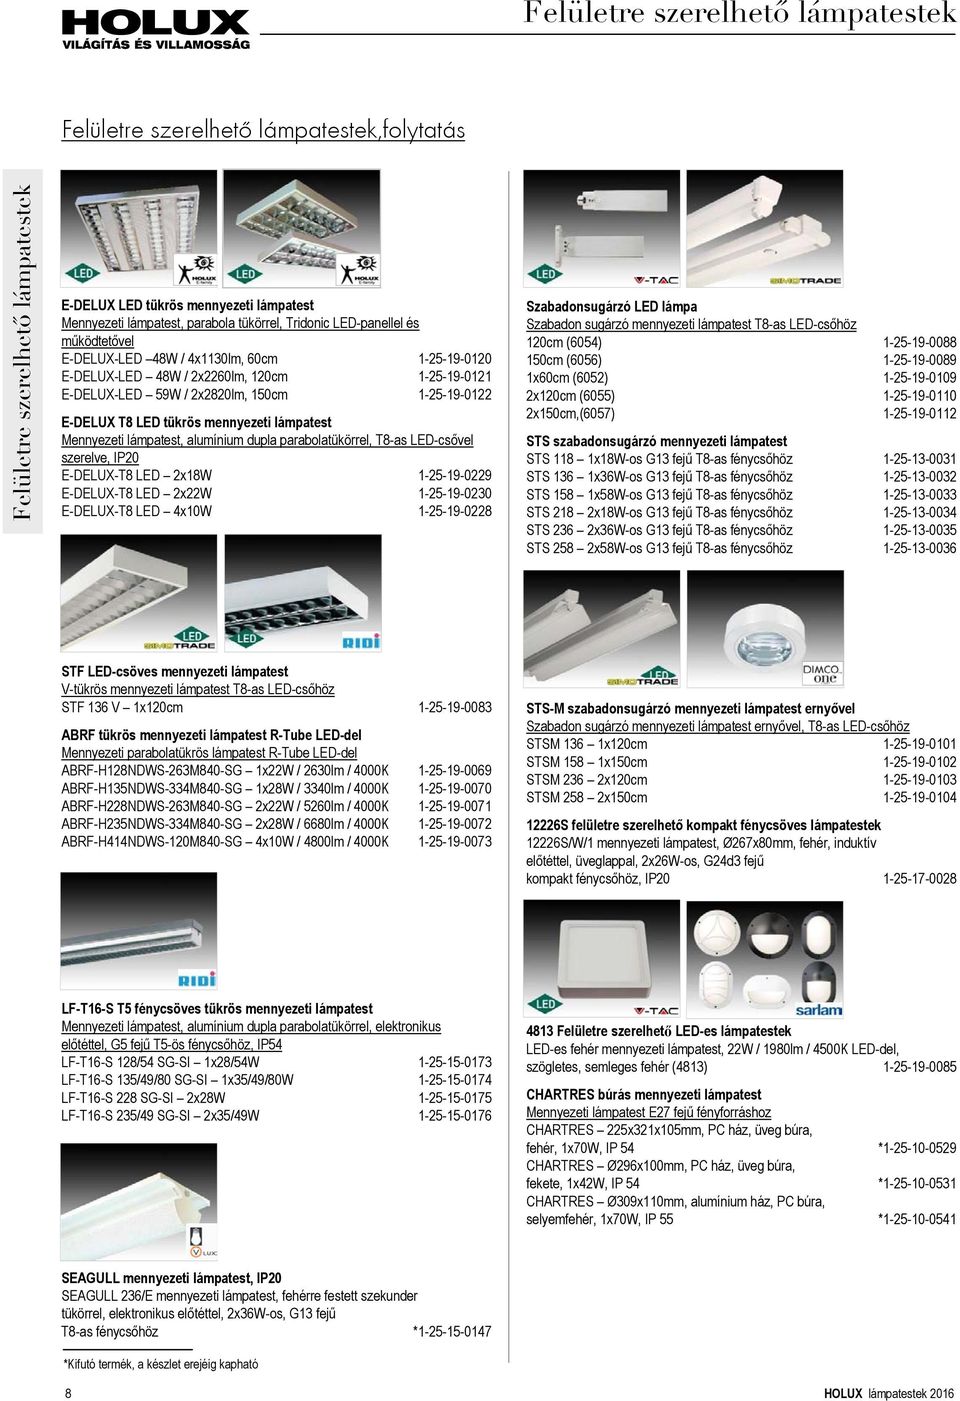 mennyezeti lámpatest Mennyezeti lámpatest, alumínium dupla parabolatükörrel, T8-as LED-csővel szerelve, IP20 E-DELUX-T8 LED 2x18W 1-25-19-0229 E-DELUX-T8 LED 2x22W 1-25-19-0230 E-DELUX-T8 LED 4x10W